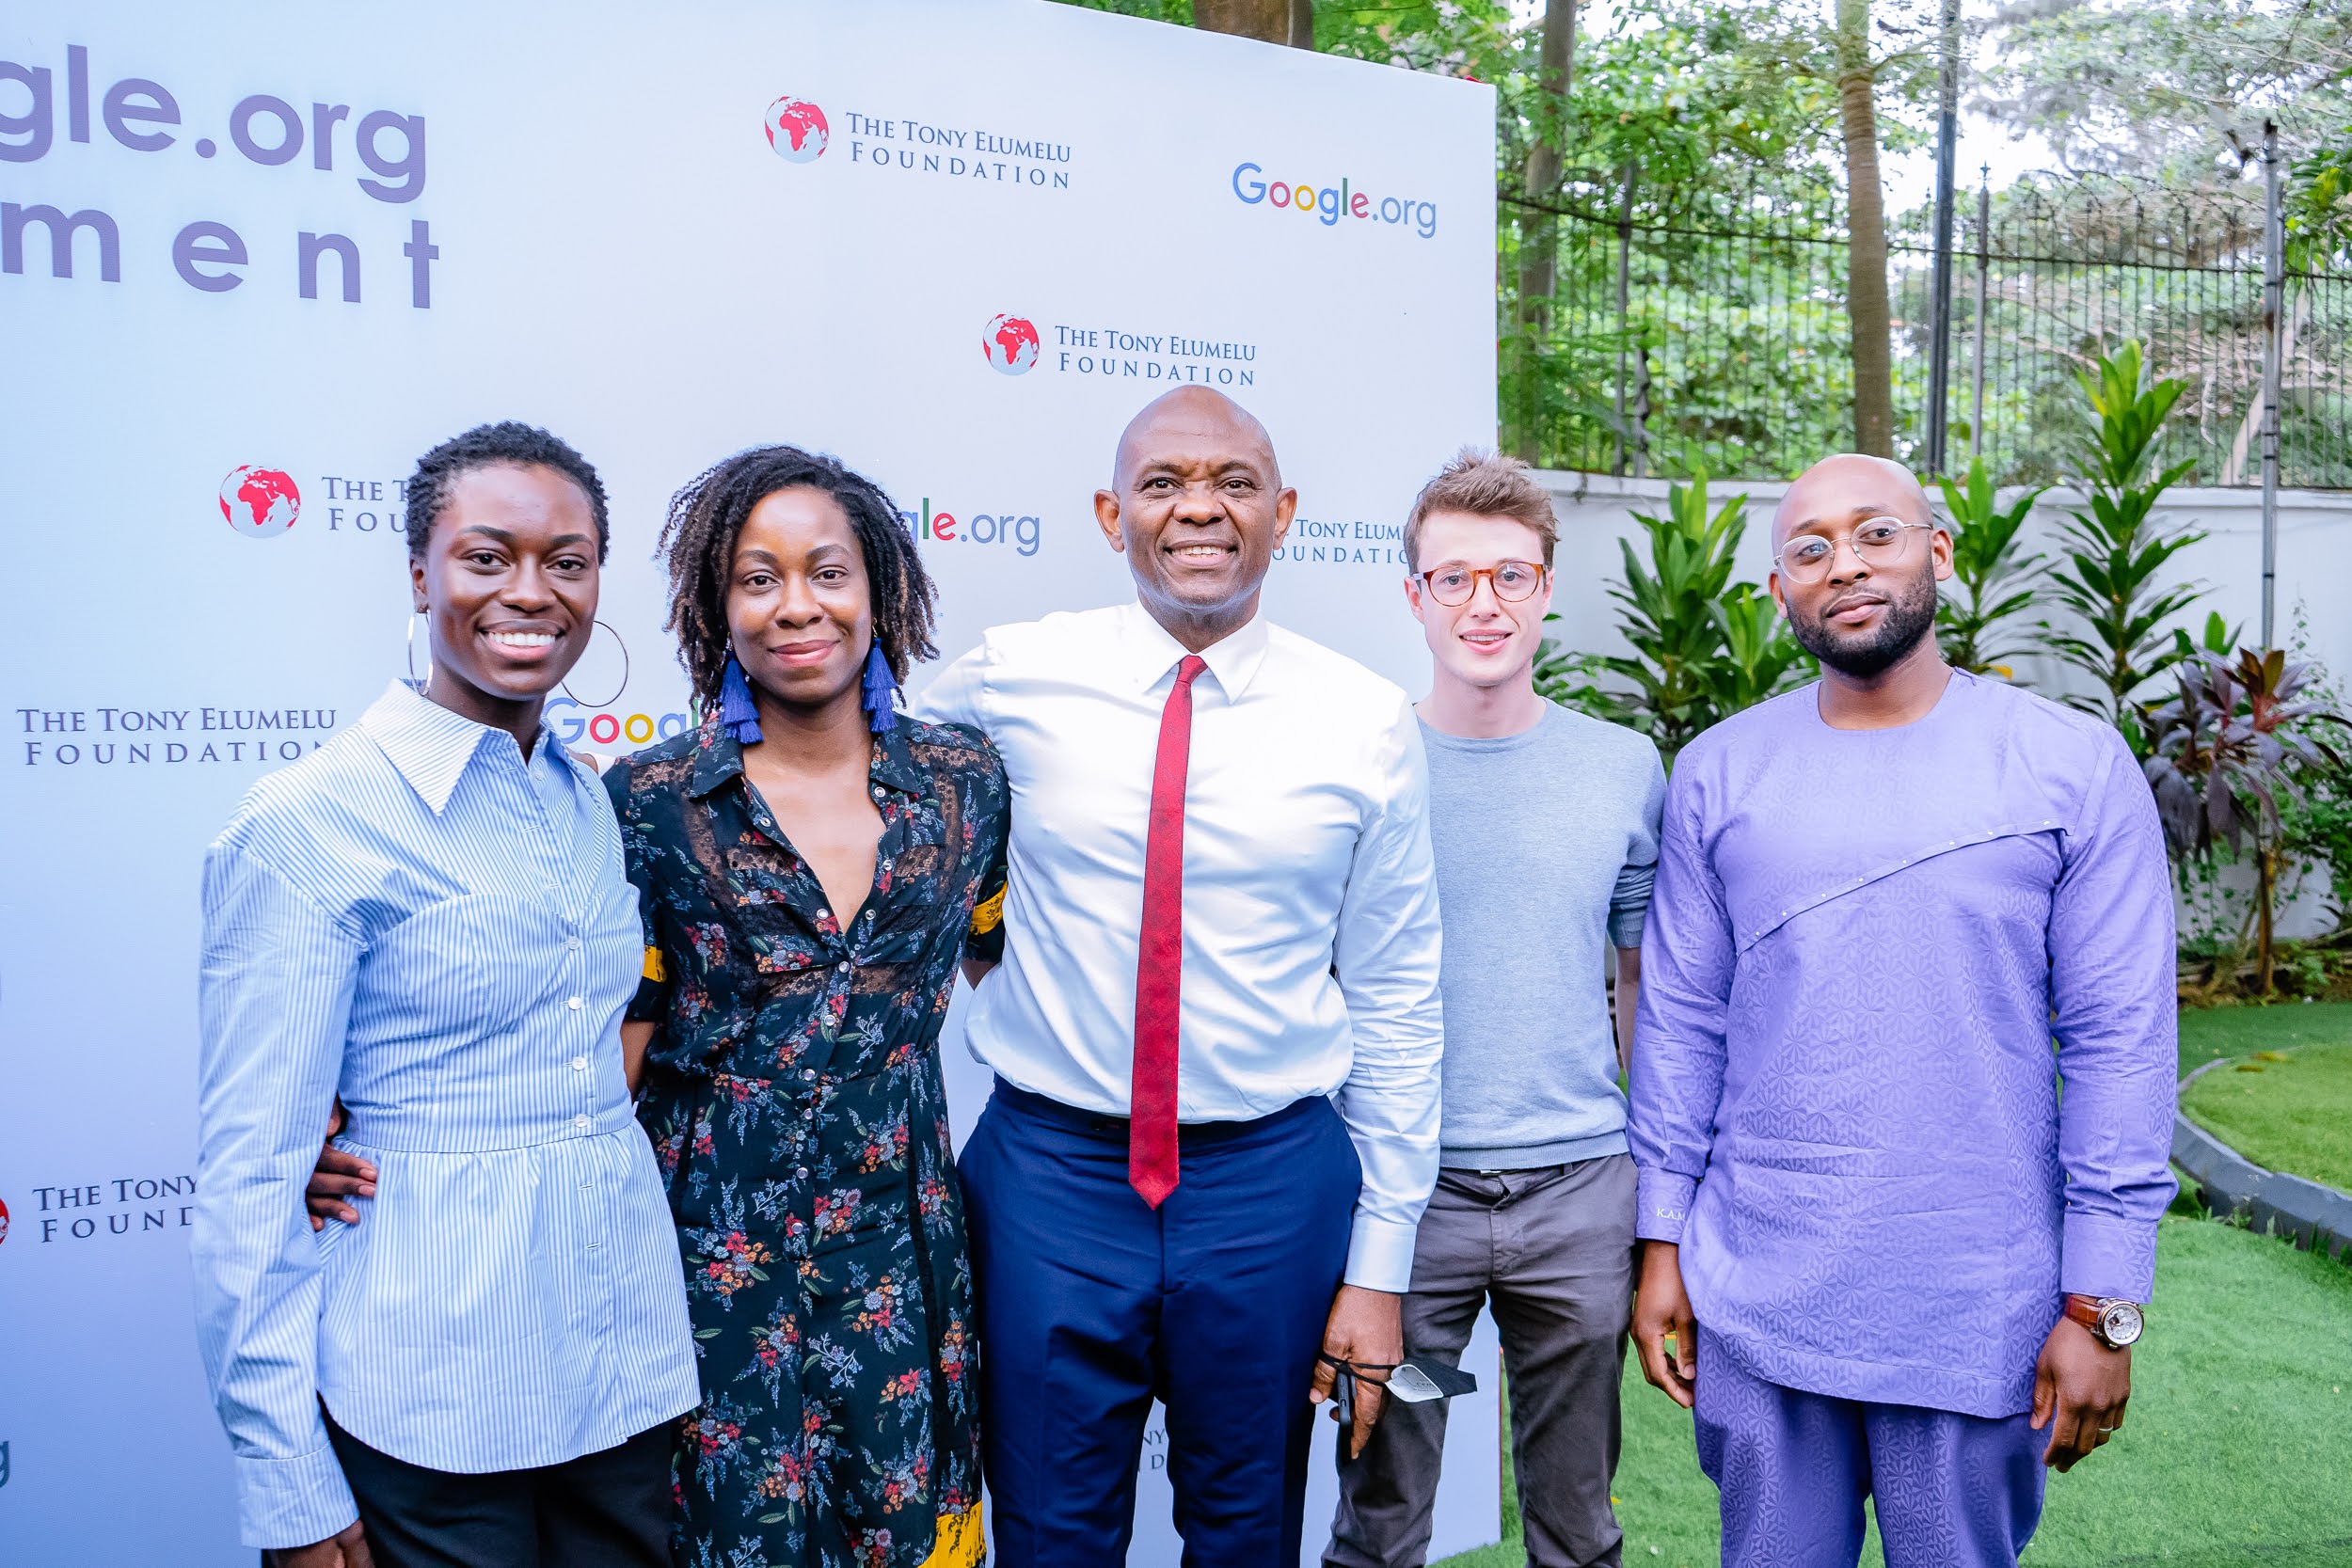 Tony Elumelu Foundation And Google Partner To Support 1m African Entrepreneurs, SiliconNigeria